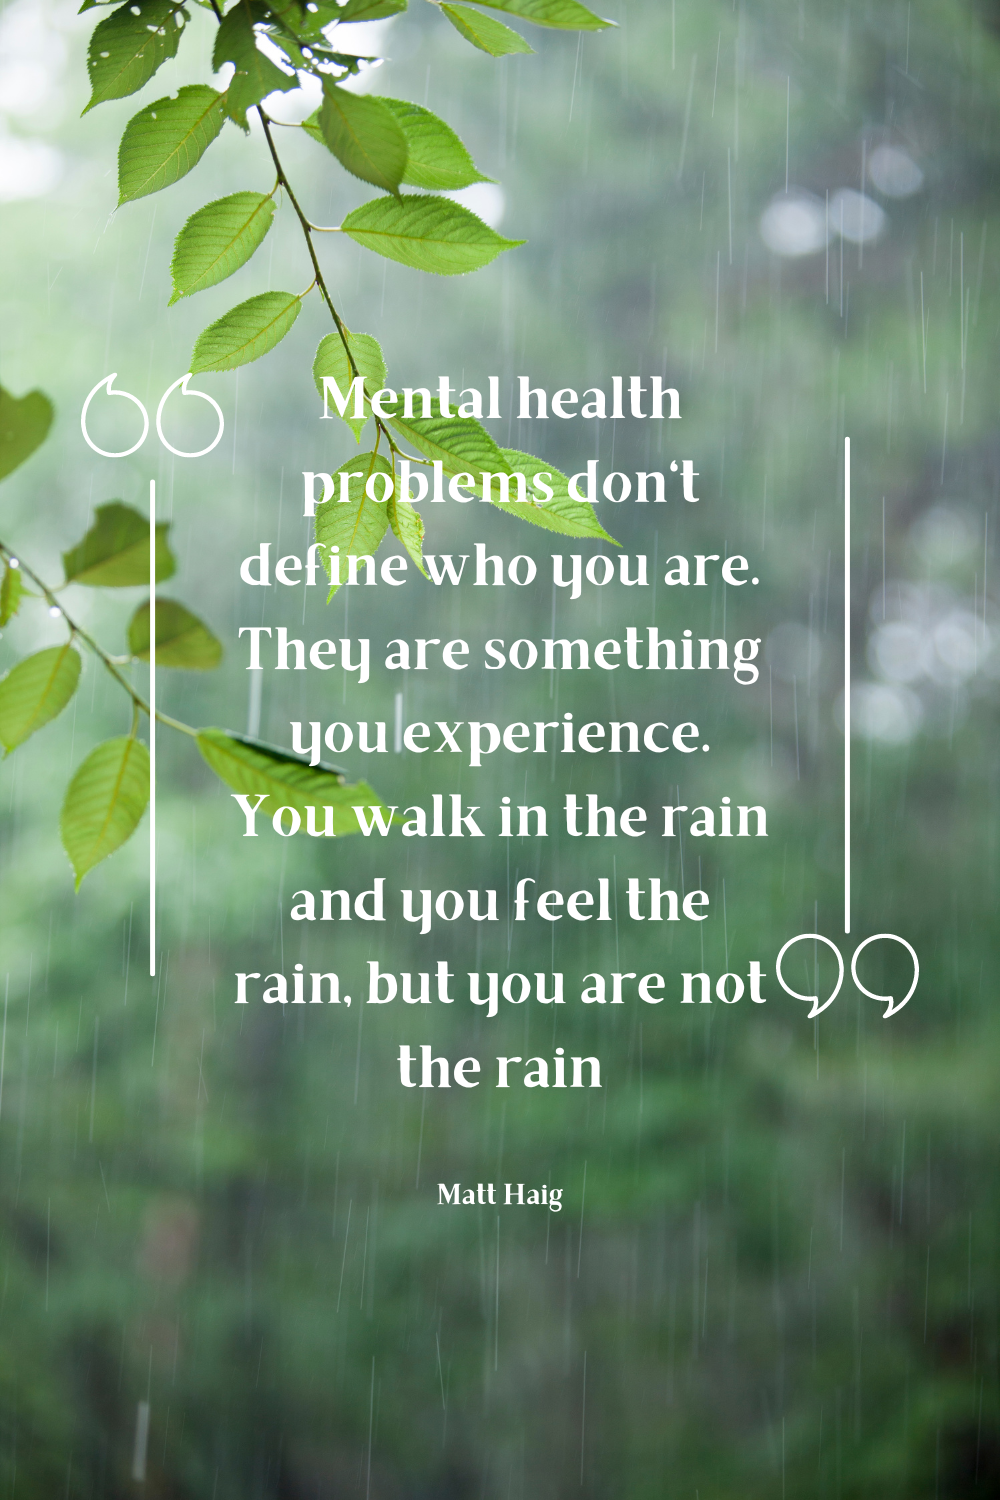 Mental health problems do not define you